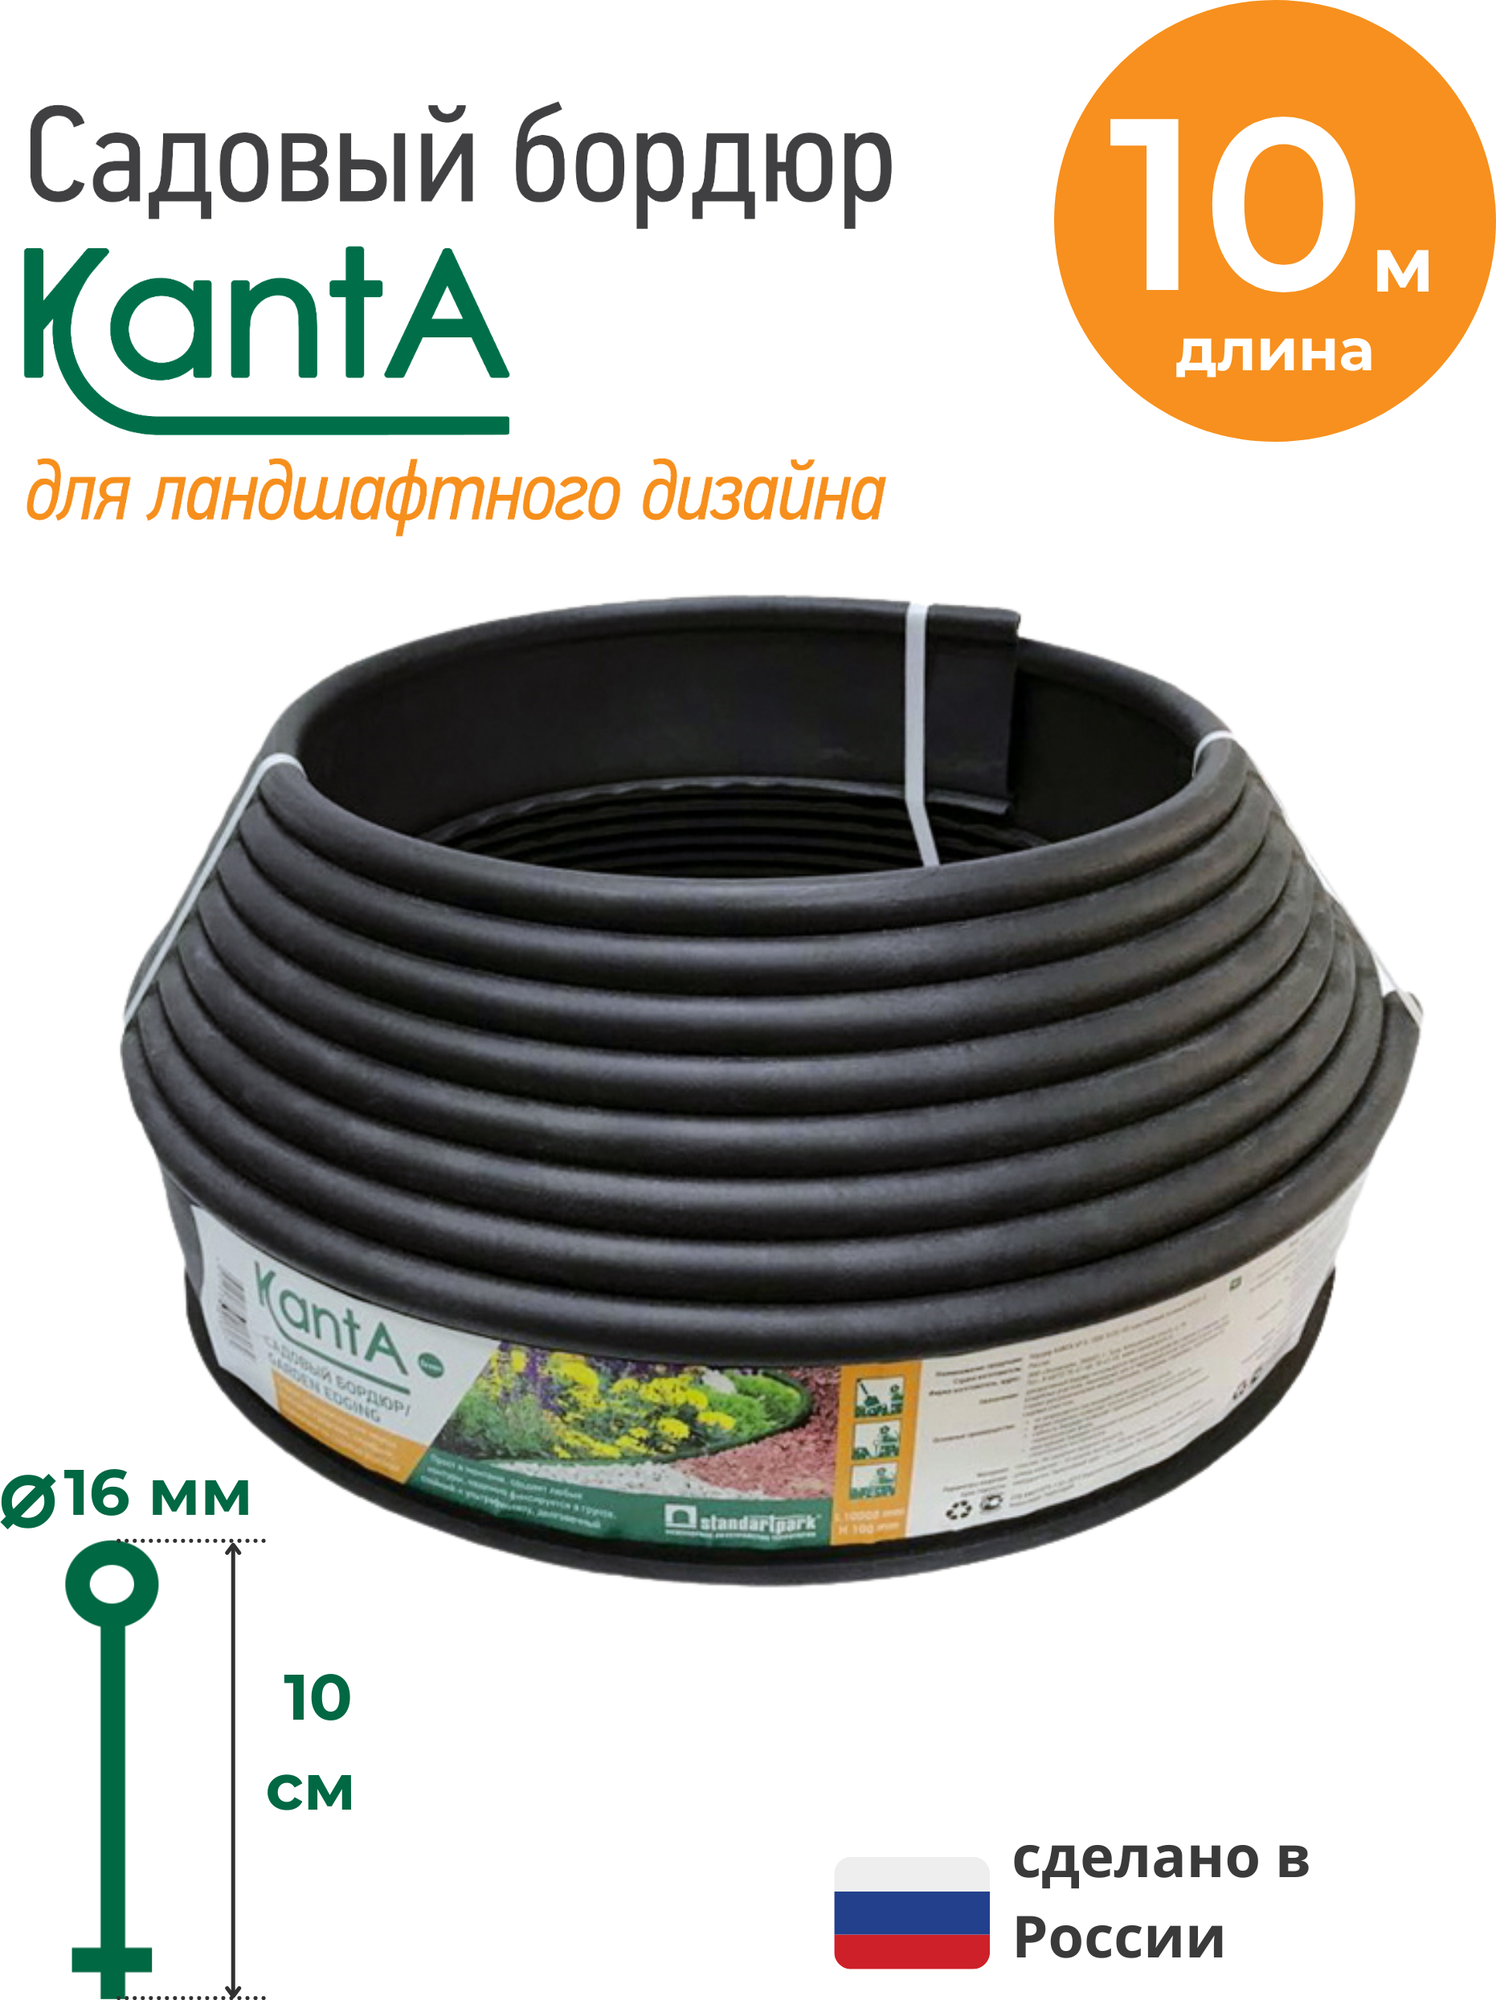 Стандартпарк Канта бордюр садовый пластик (10м х100 мм) черный / STANDARTPARK Канта 82552-Ч бордюр садовый (10000 х100 мм) пластик, черный